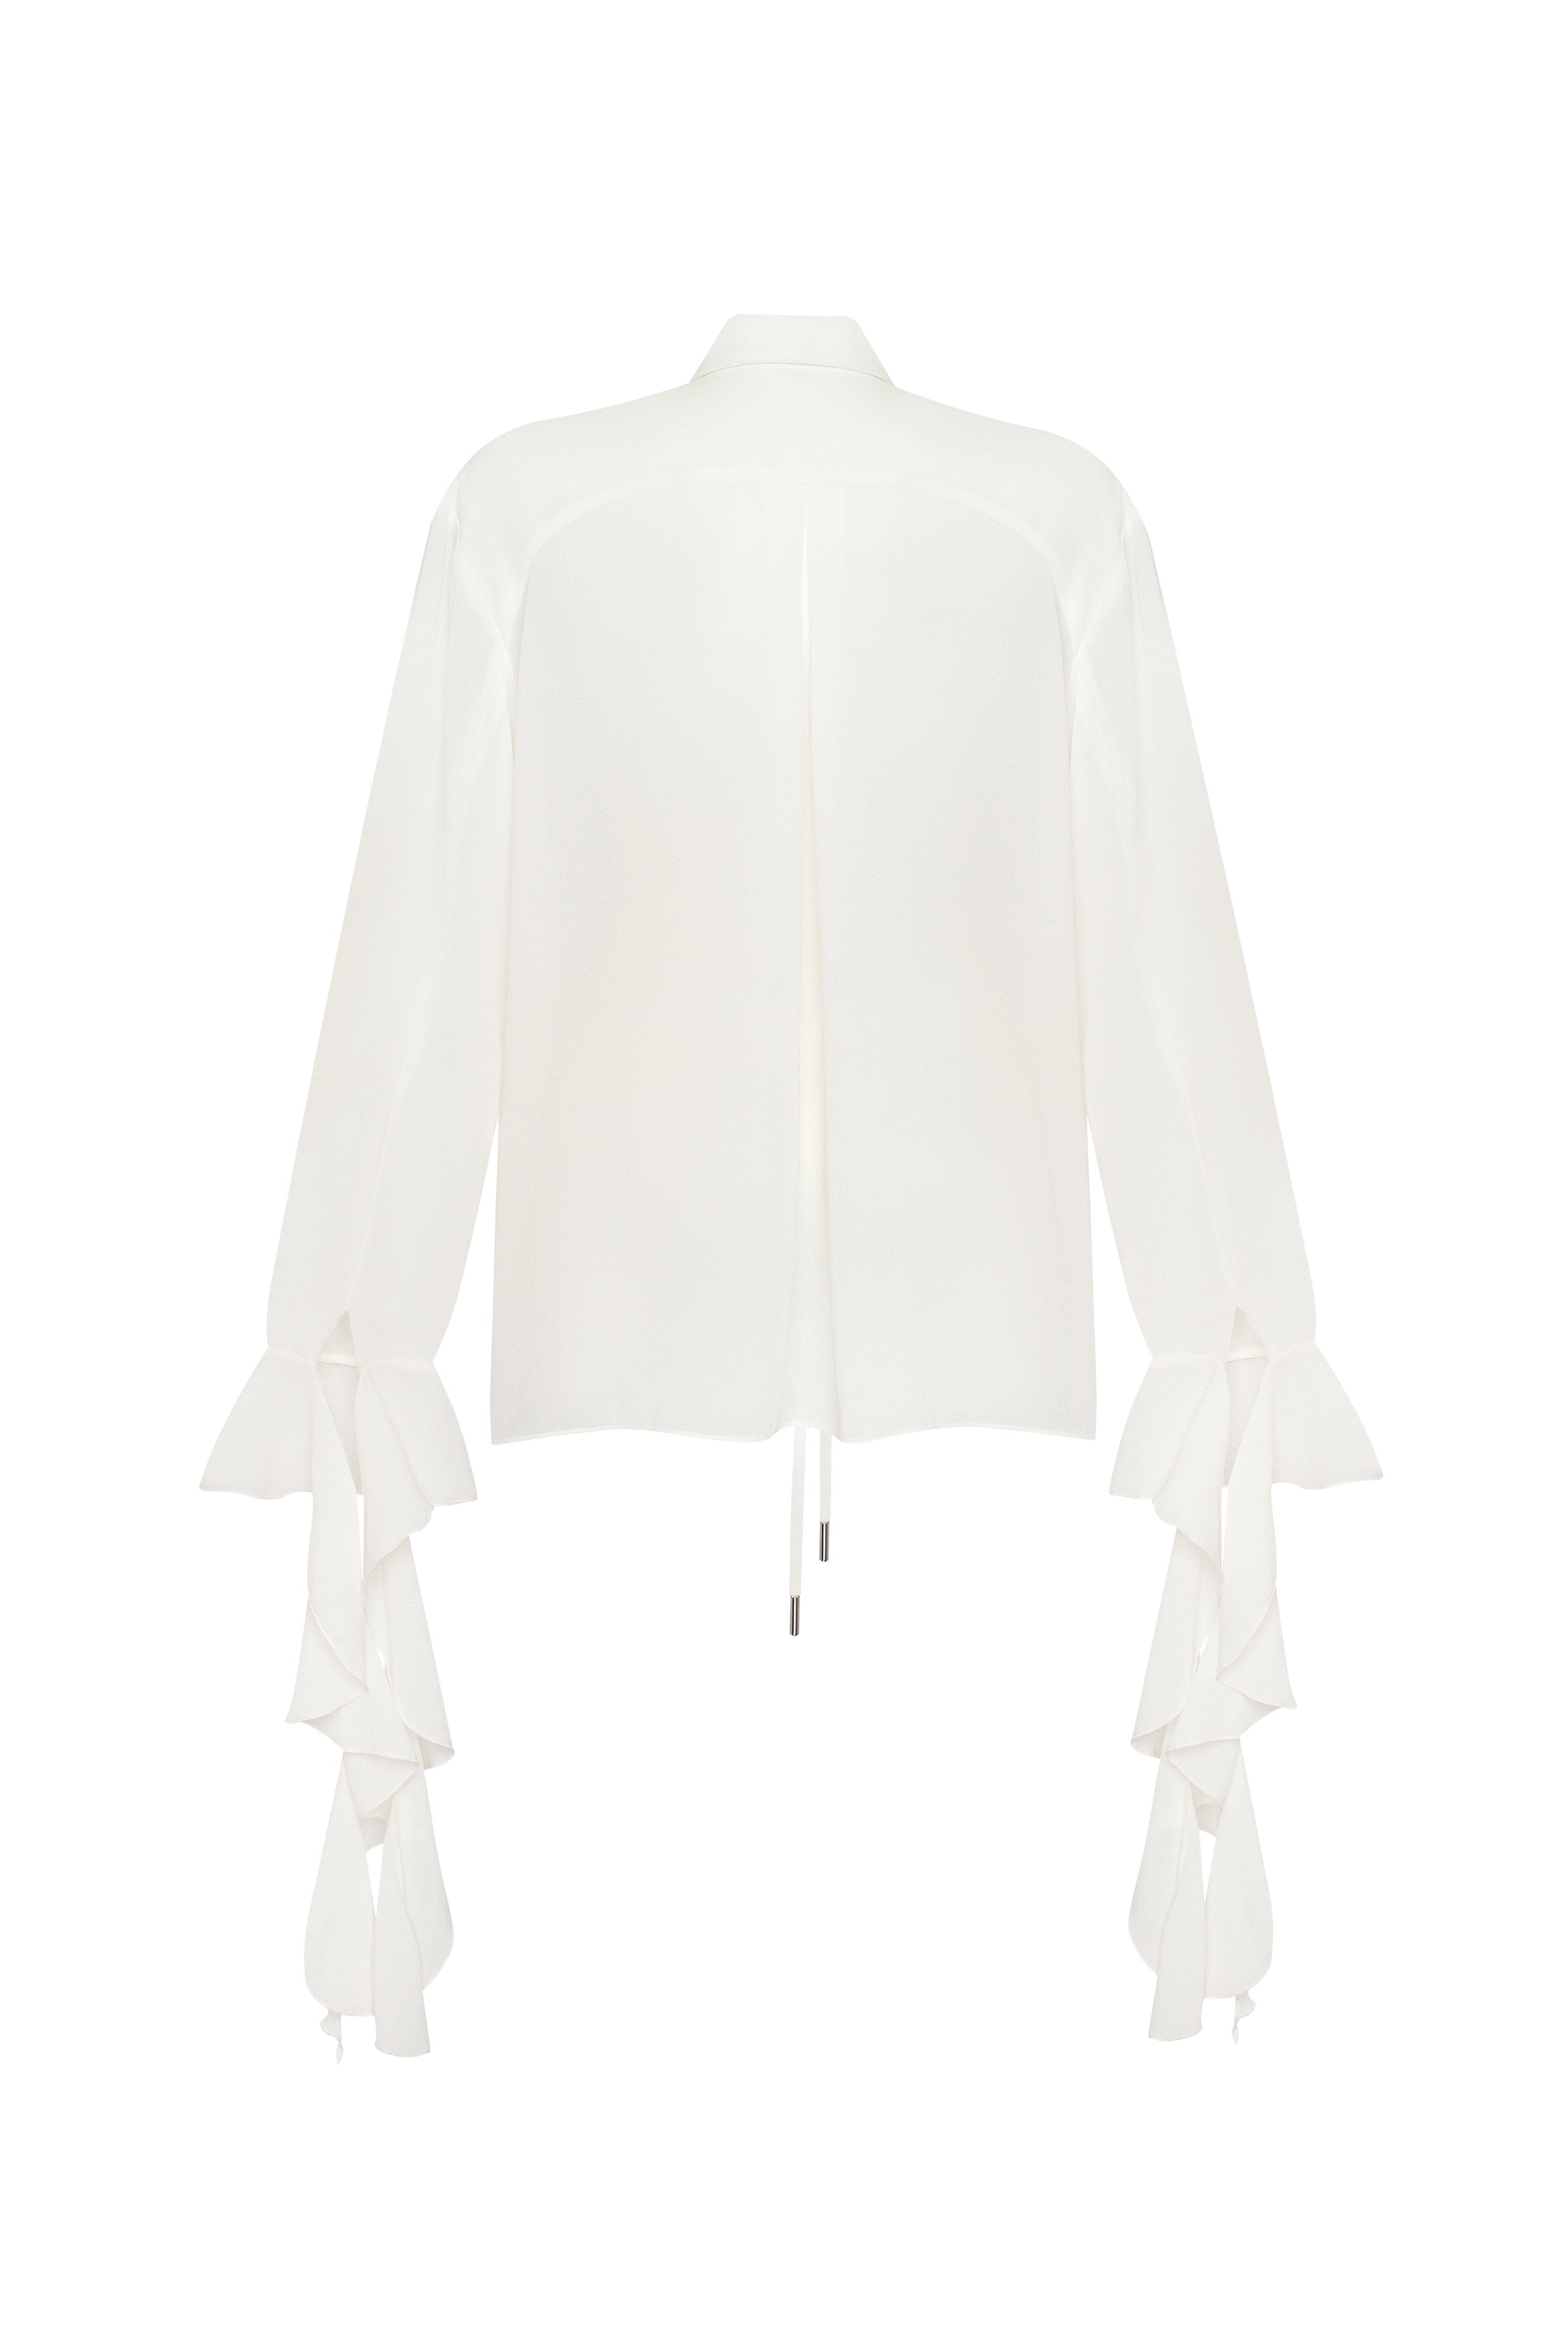 Ruffled blouse in white, Xo Xo Milla Dresses - USA, Worldwide delivery